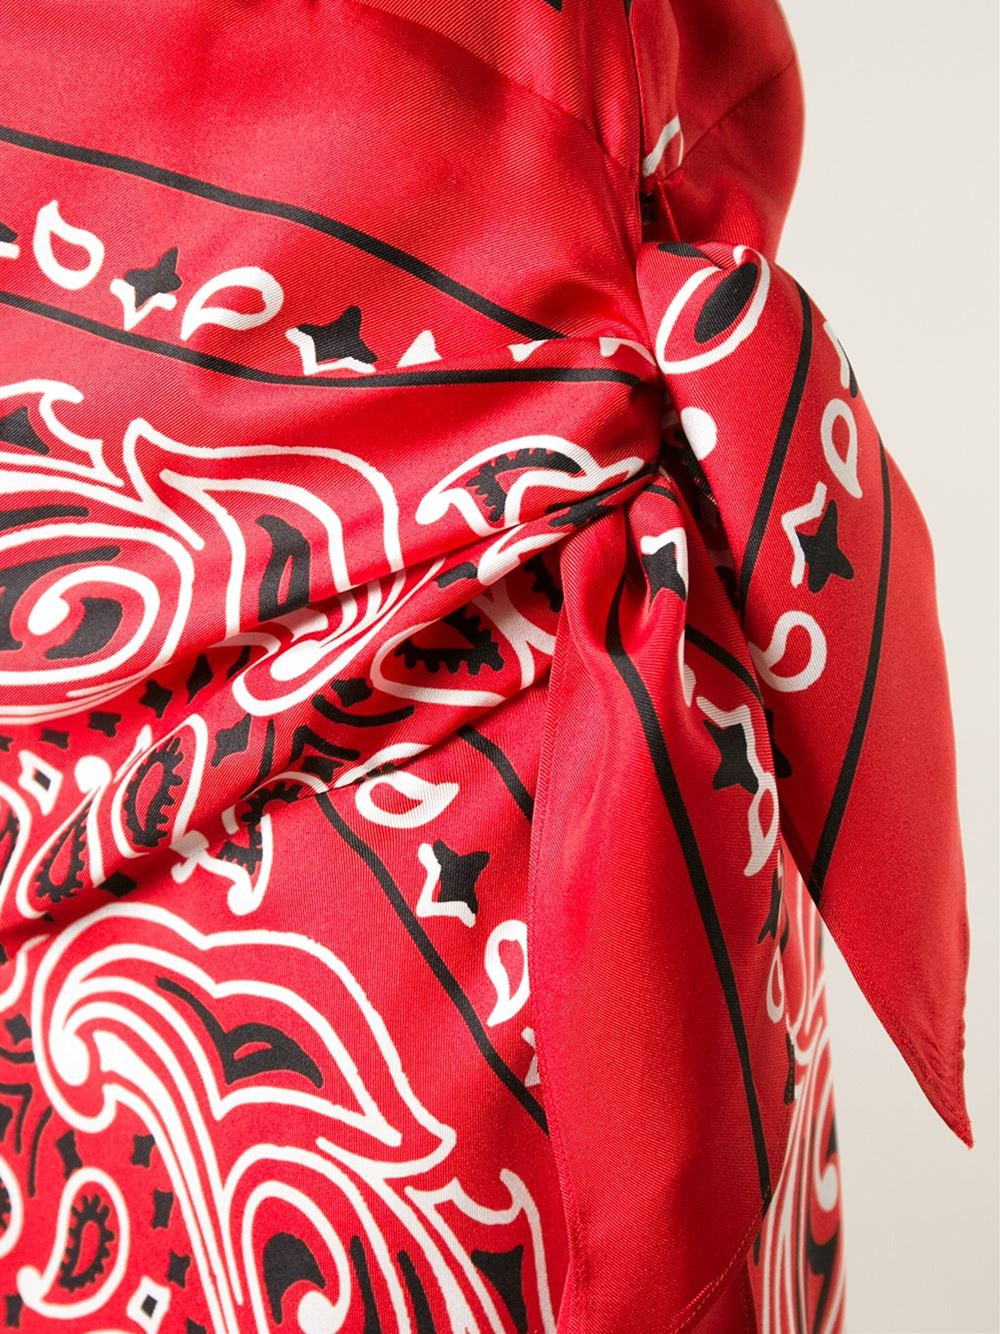 Moschino Bandana Print Evening Dress in Red - Lyst